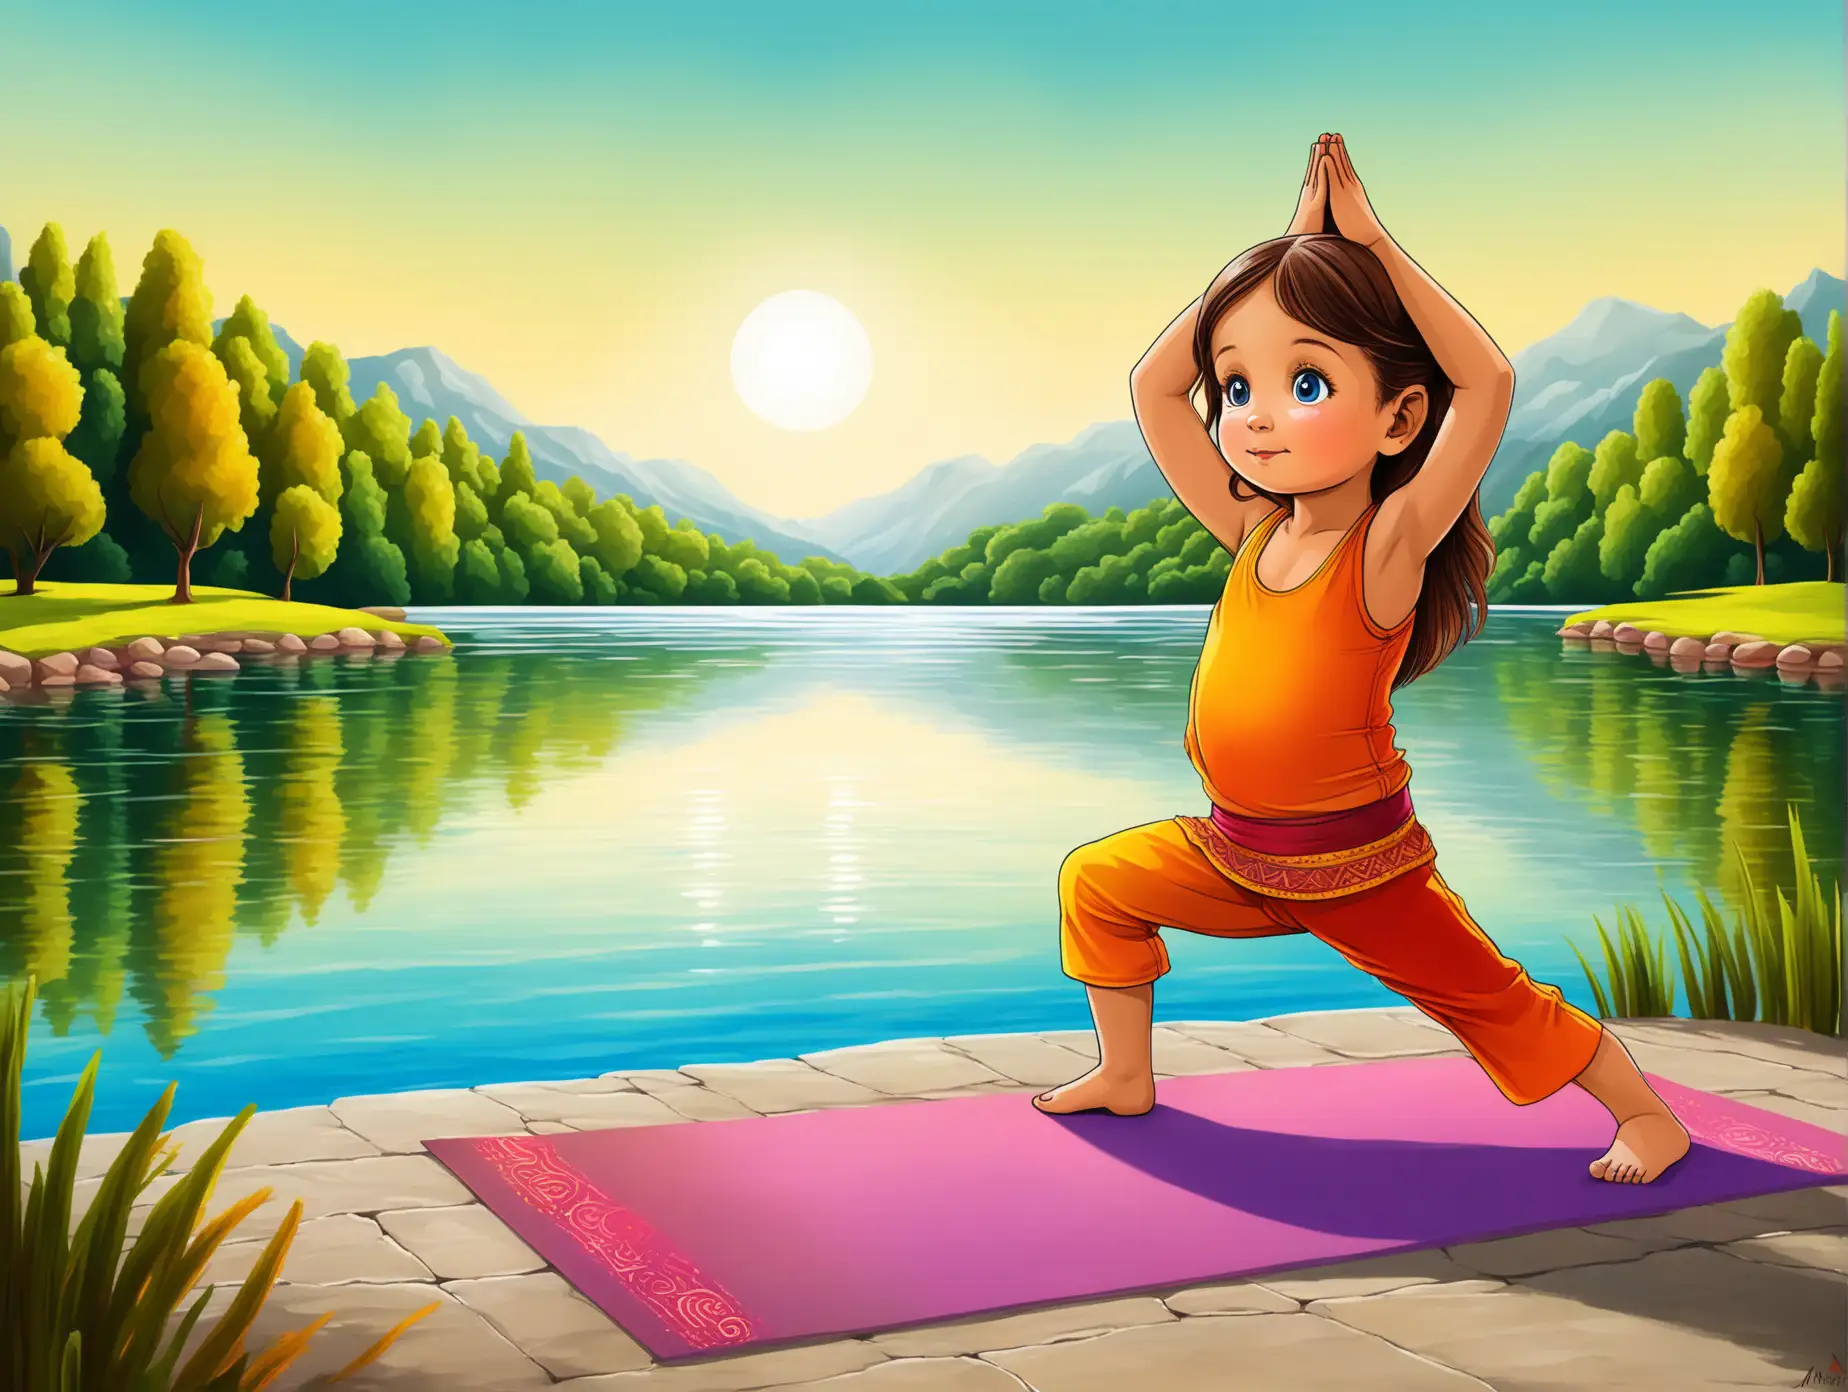 Young Child Practicing Yoga by the Lake Vibrant Interpretation Inspired by Mario Miranda